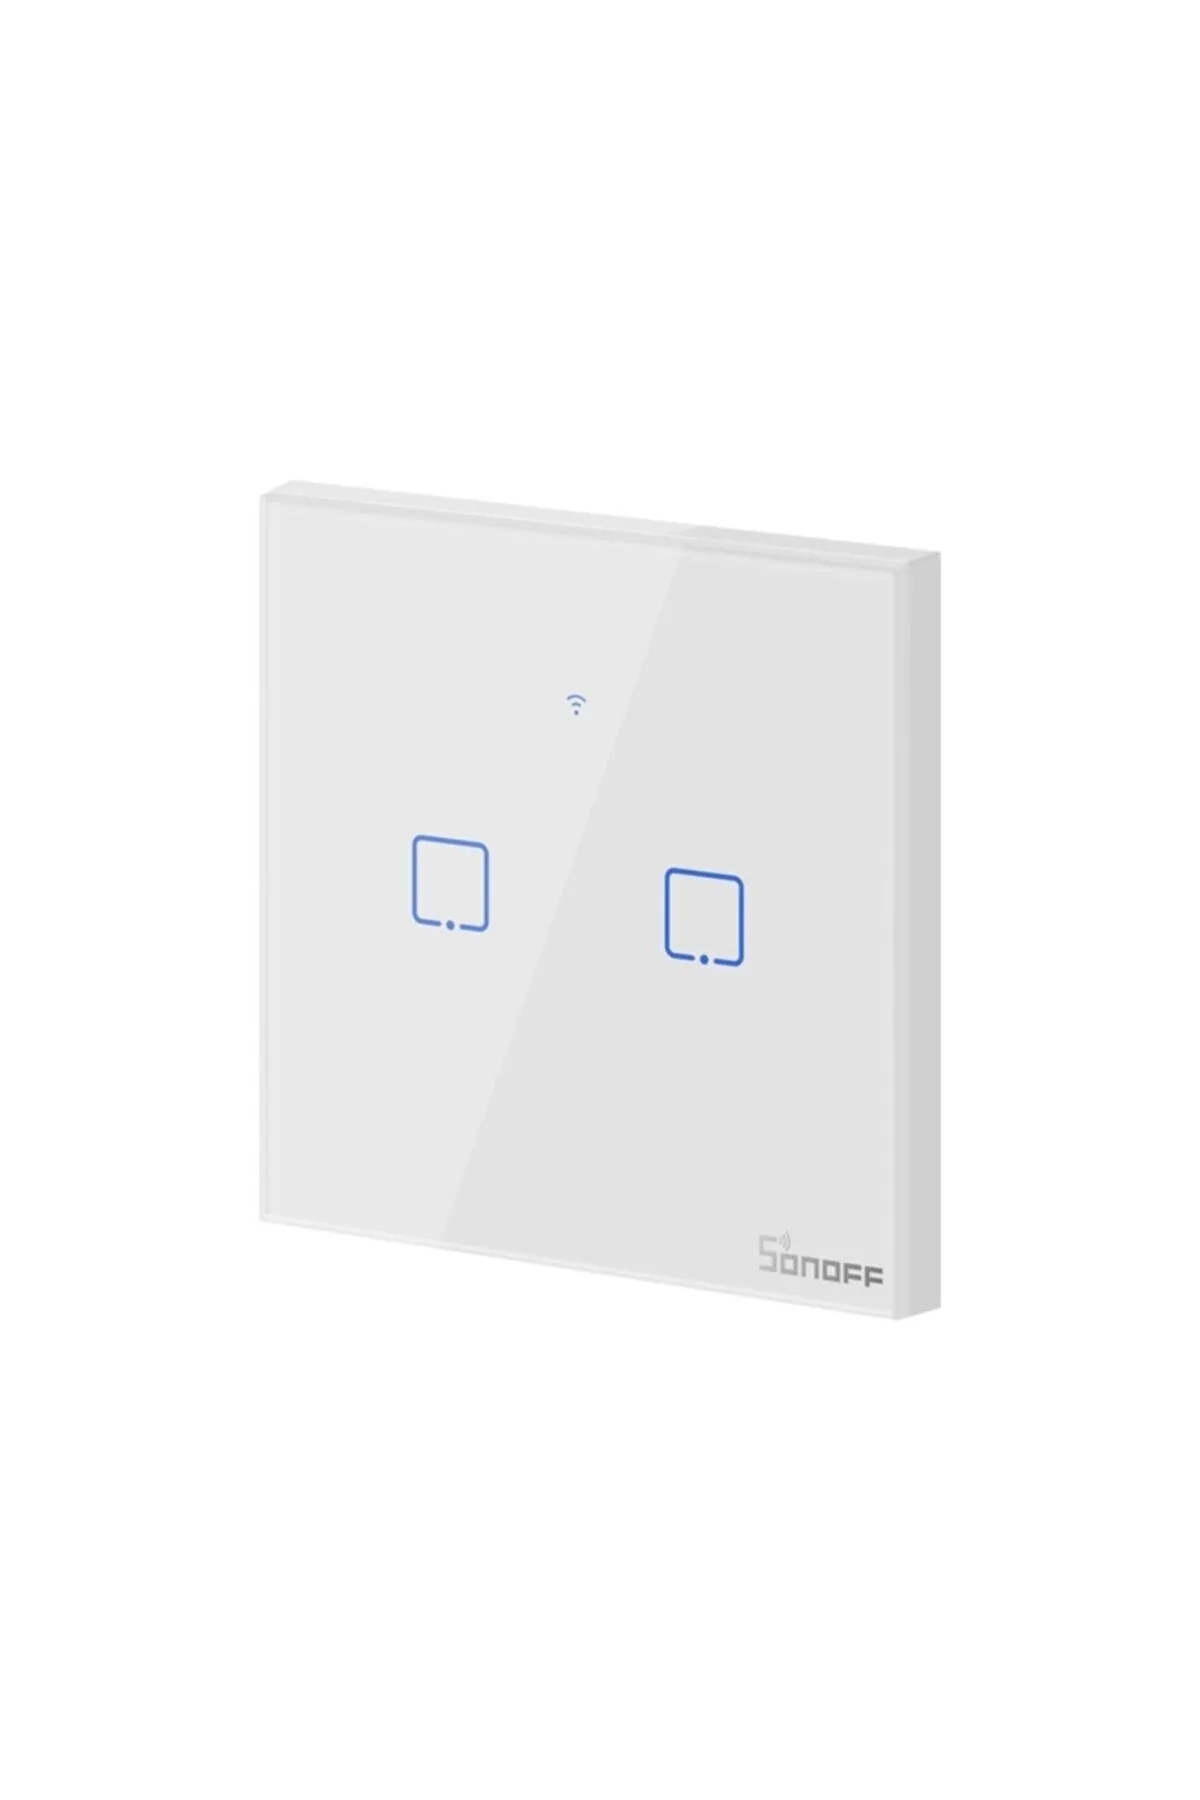 Sonoff T0EU2C - Smart Switch- Google and Alexa Compatible - 1